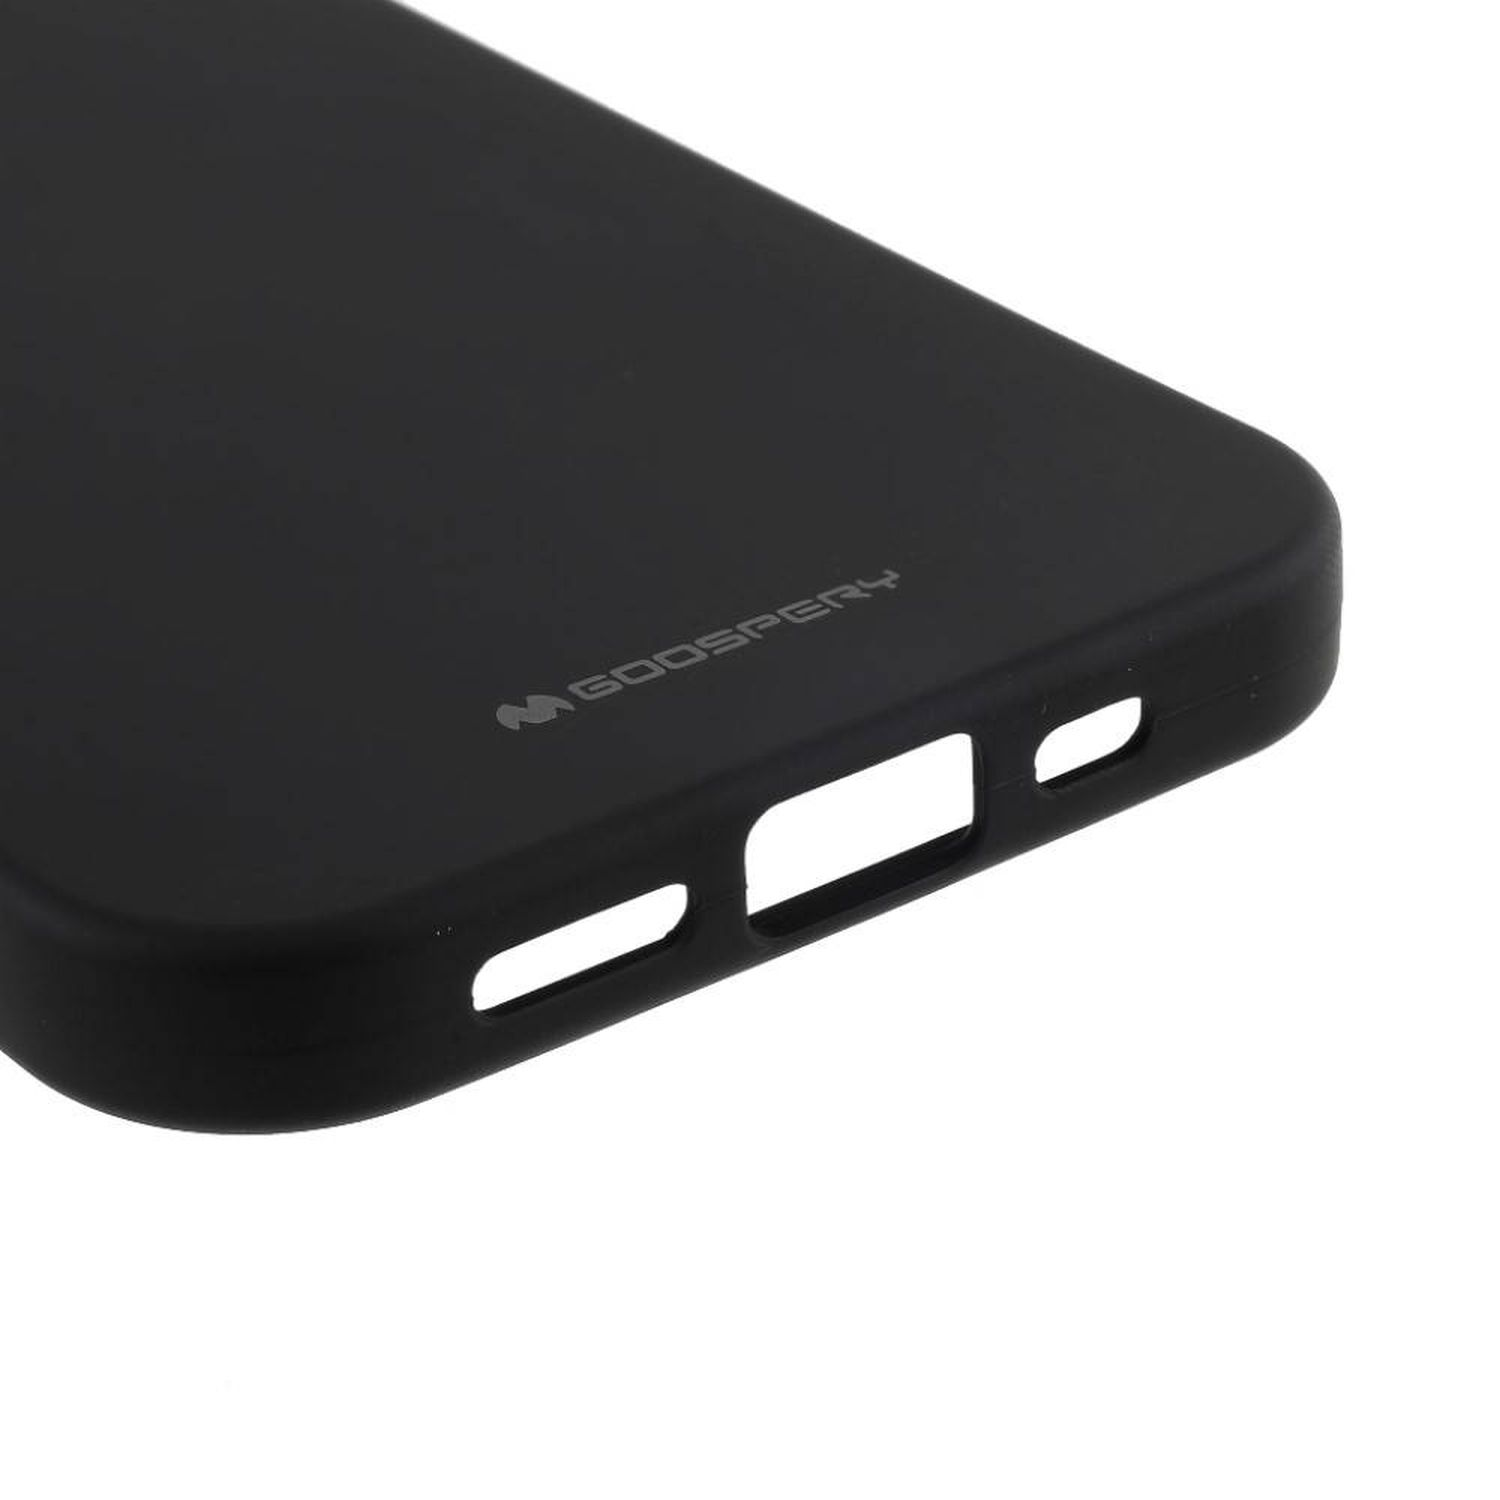 Schwarz COFI iPhone Case, Apple, 12 Bumper, Soft Mini, Jelly